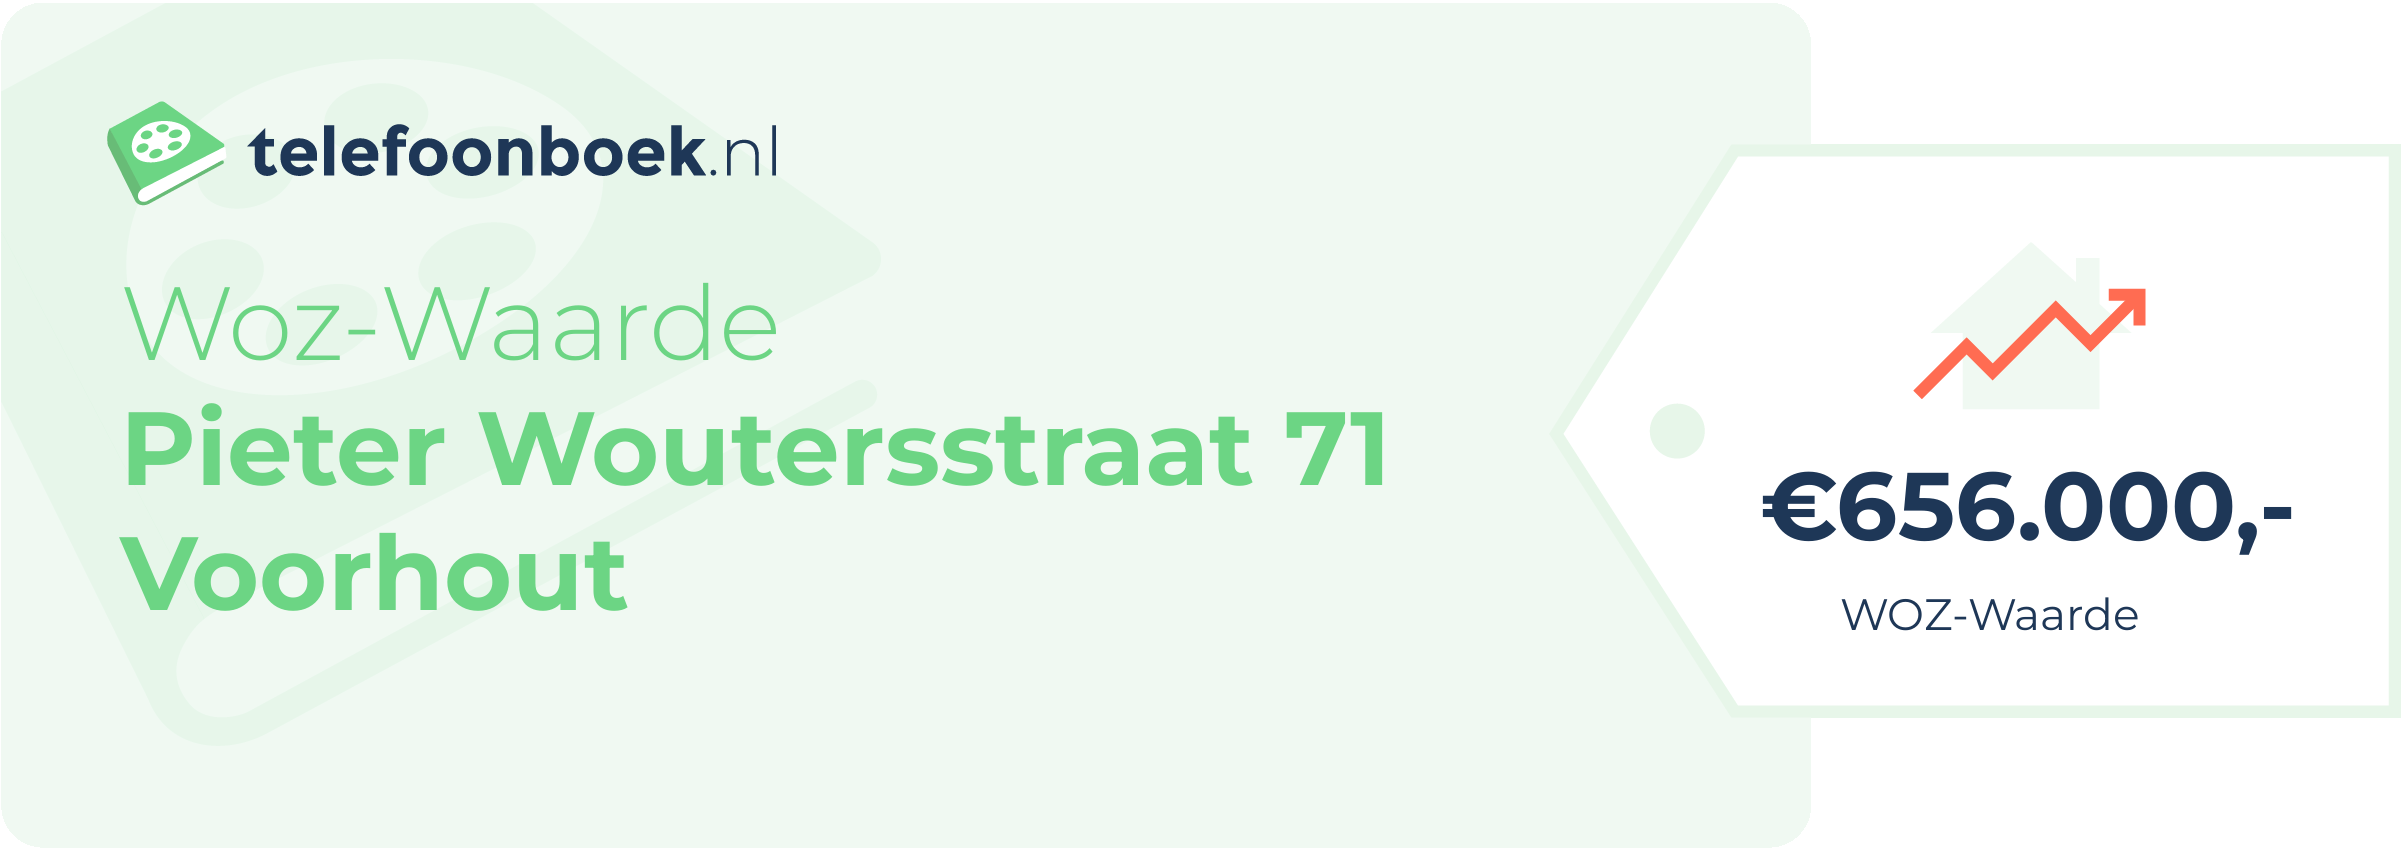 WOZ-waarde Pieter Woutersstraat 71 Voorhout